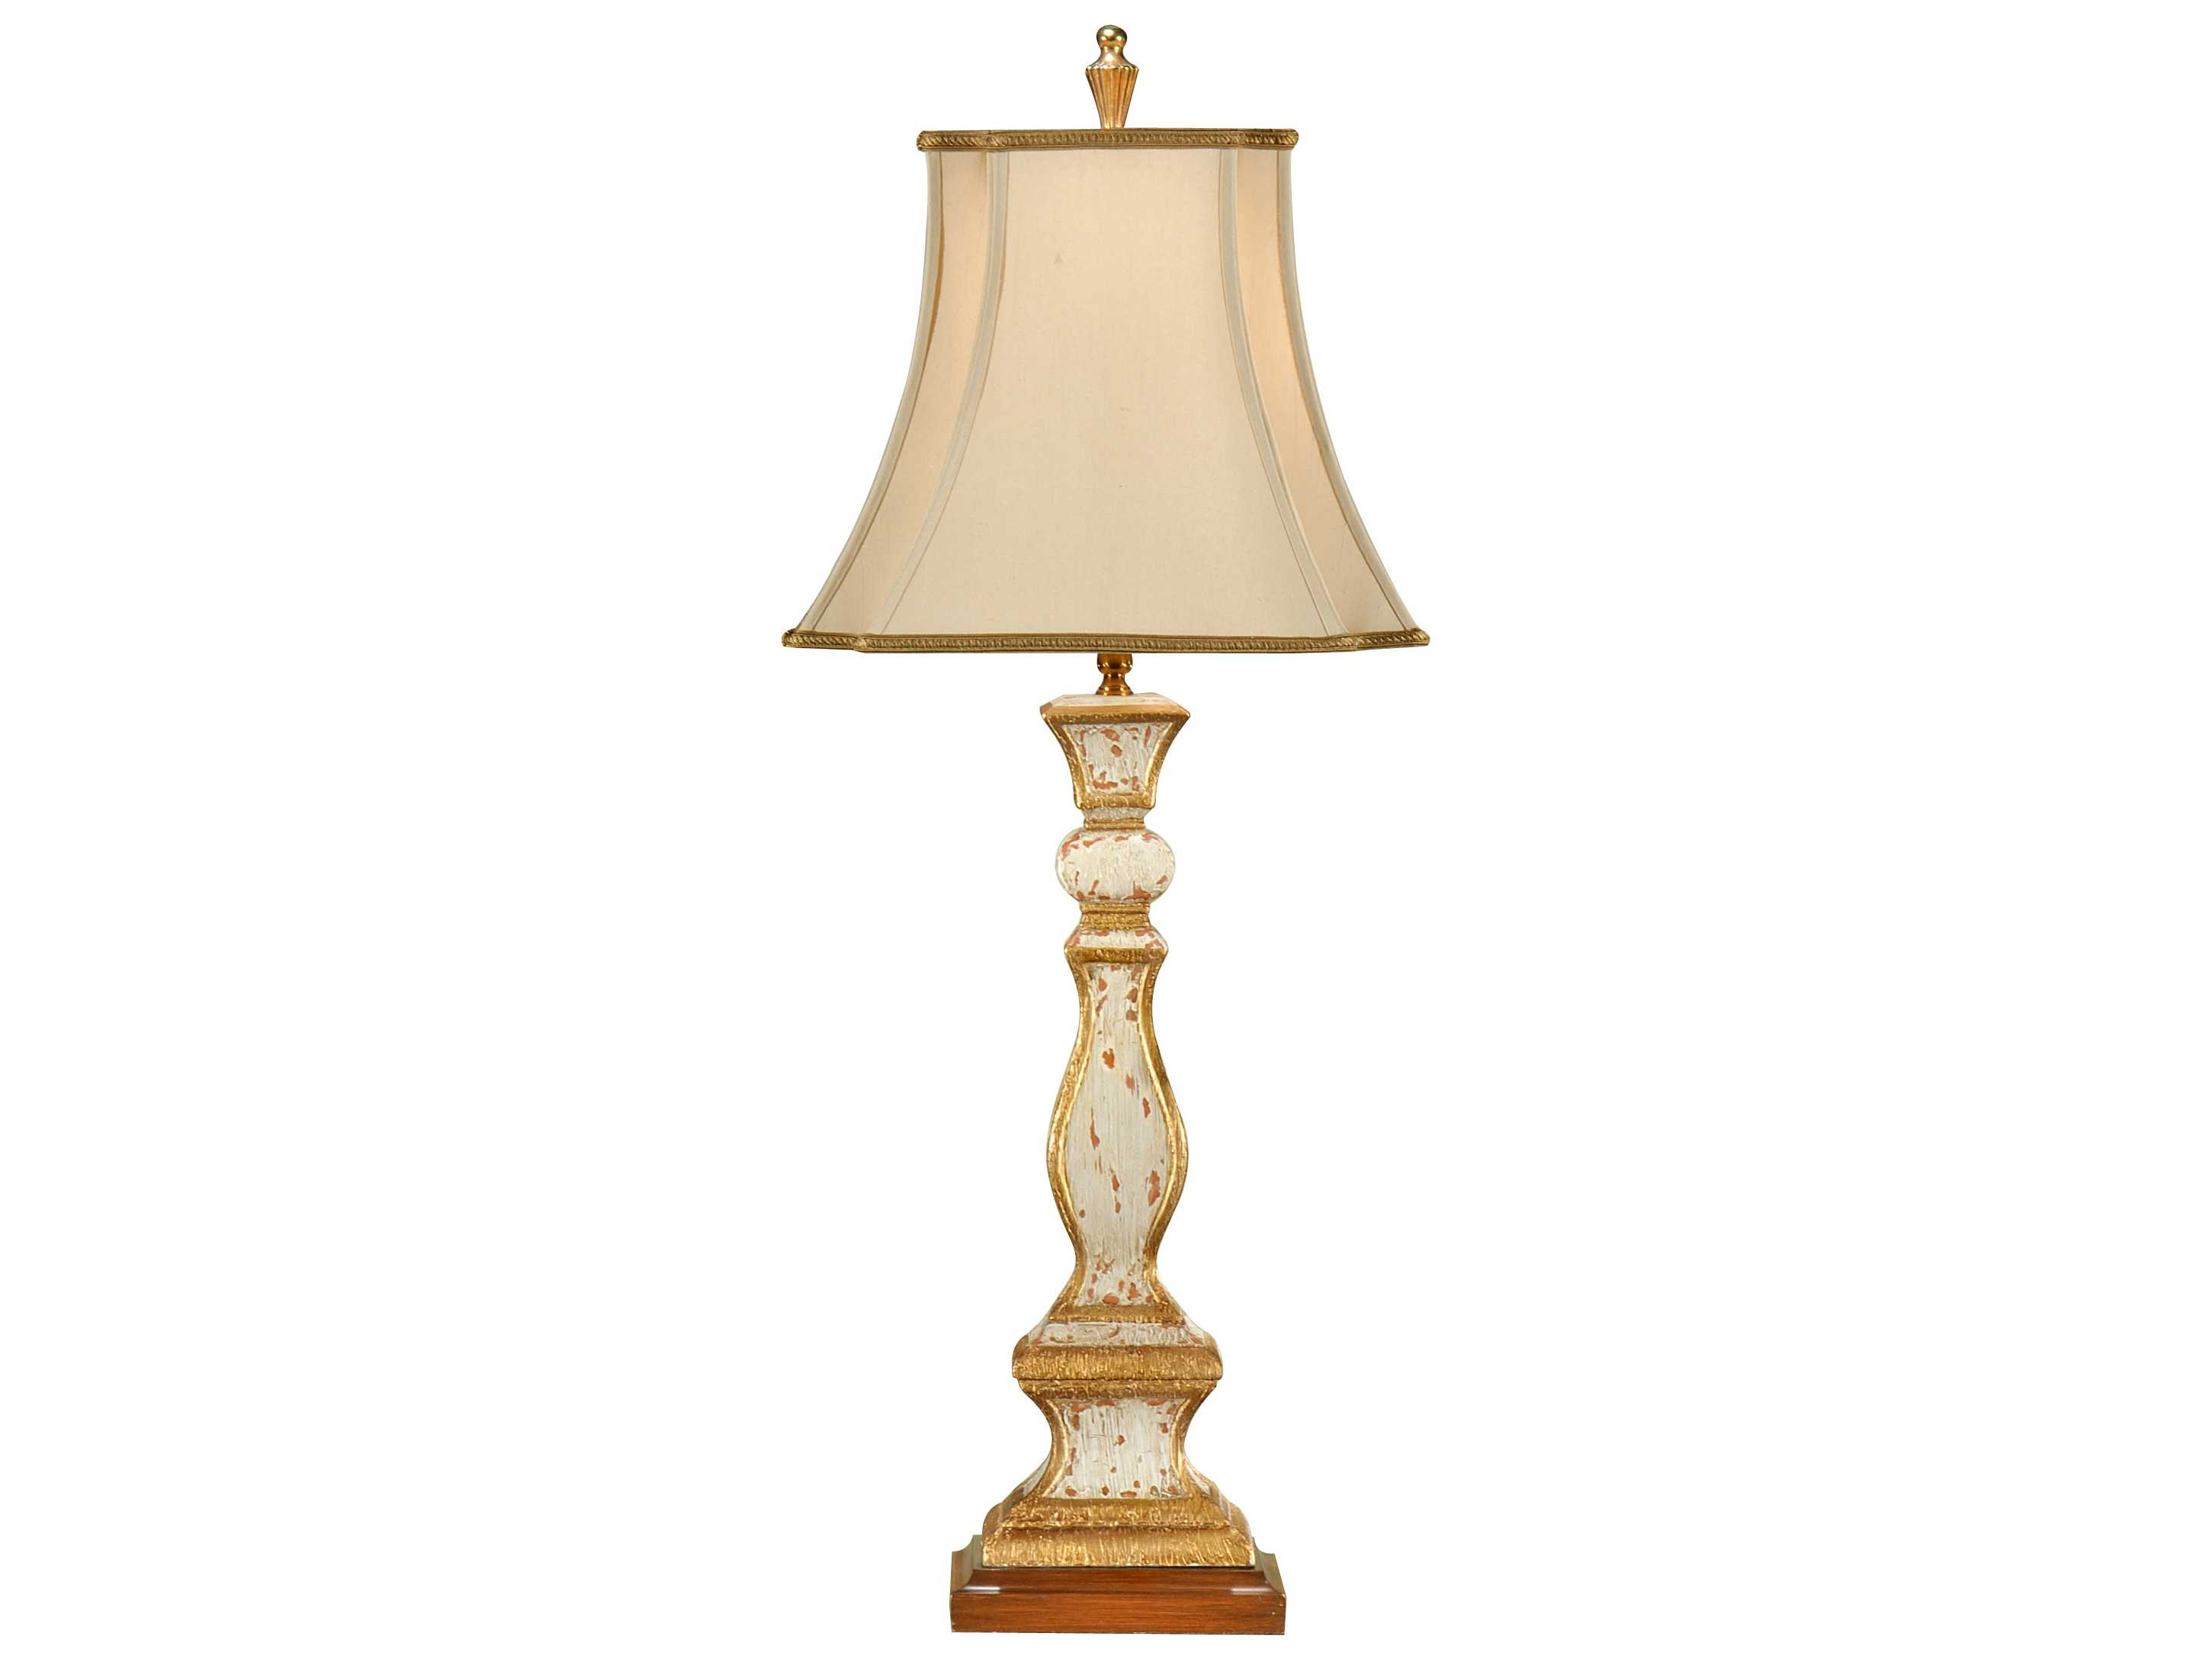 Wildwood Lamps Old Worn Antiqued Old White Gold Column Table Lamp regarding sizing 2901 X 2176